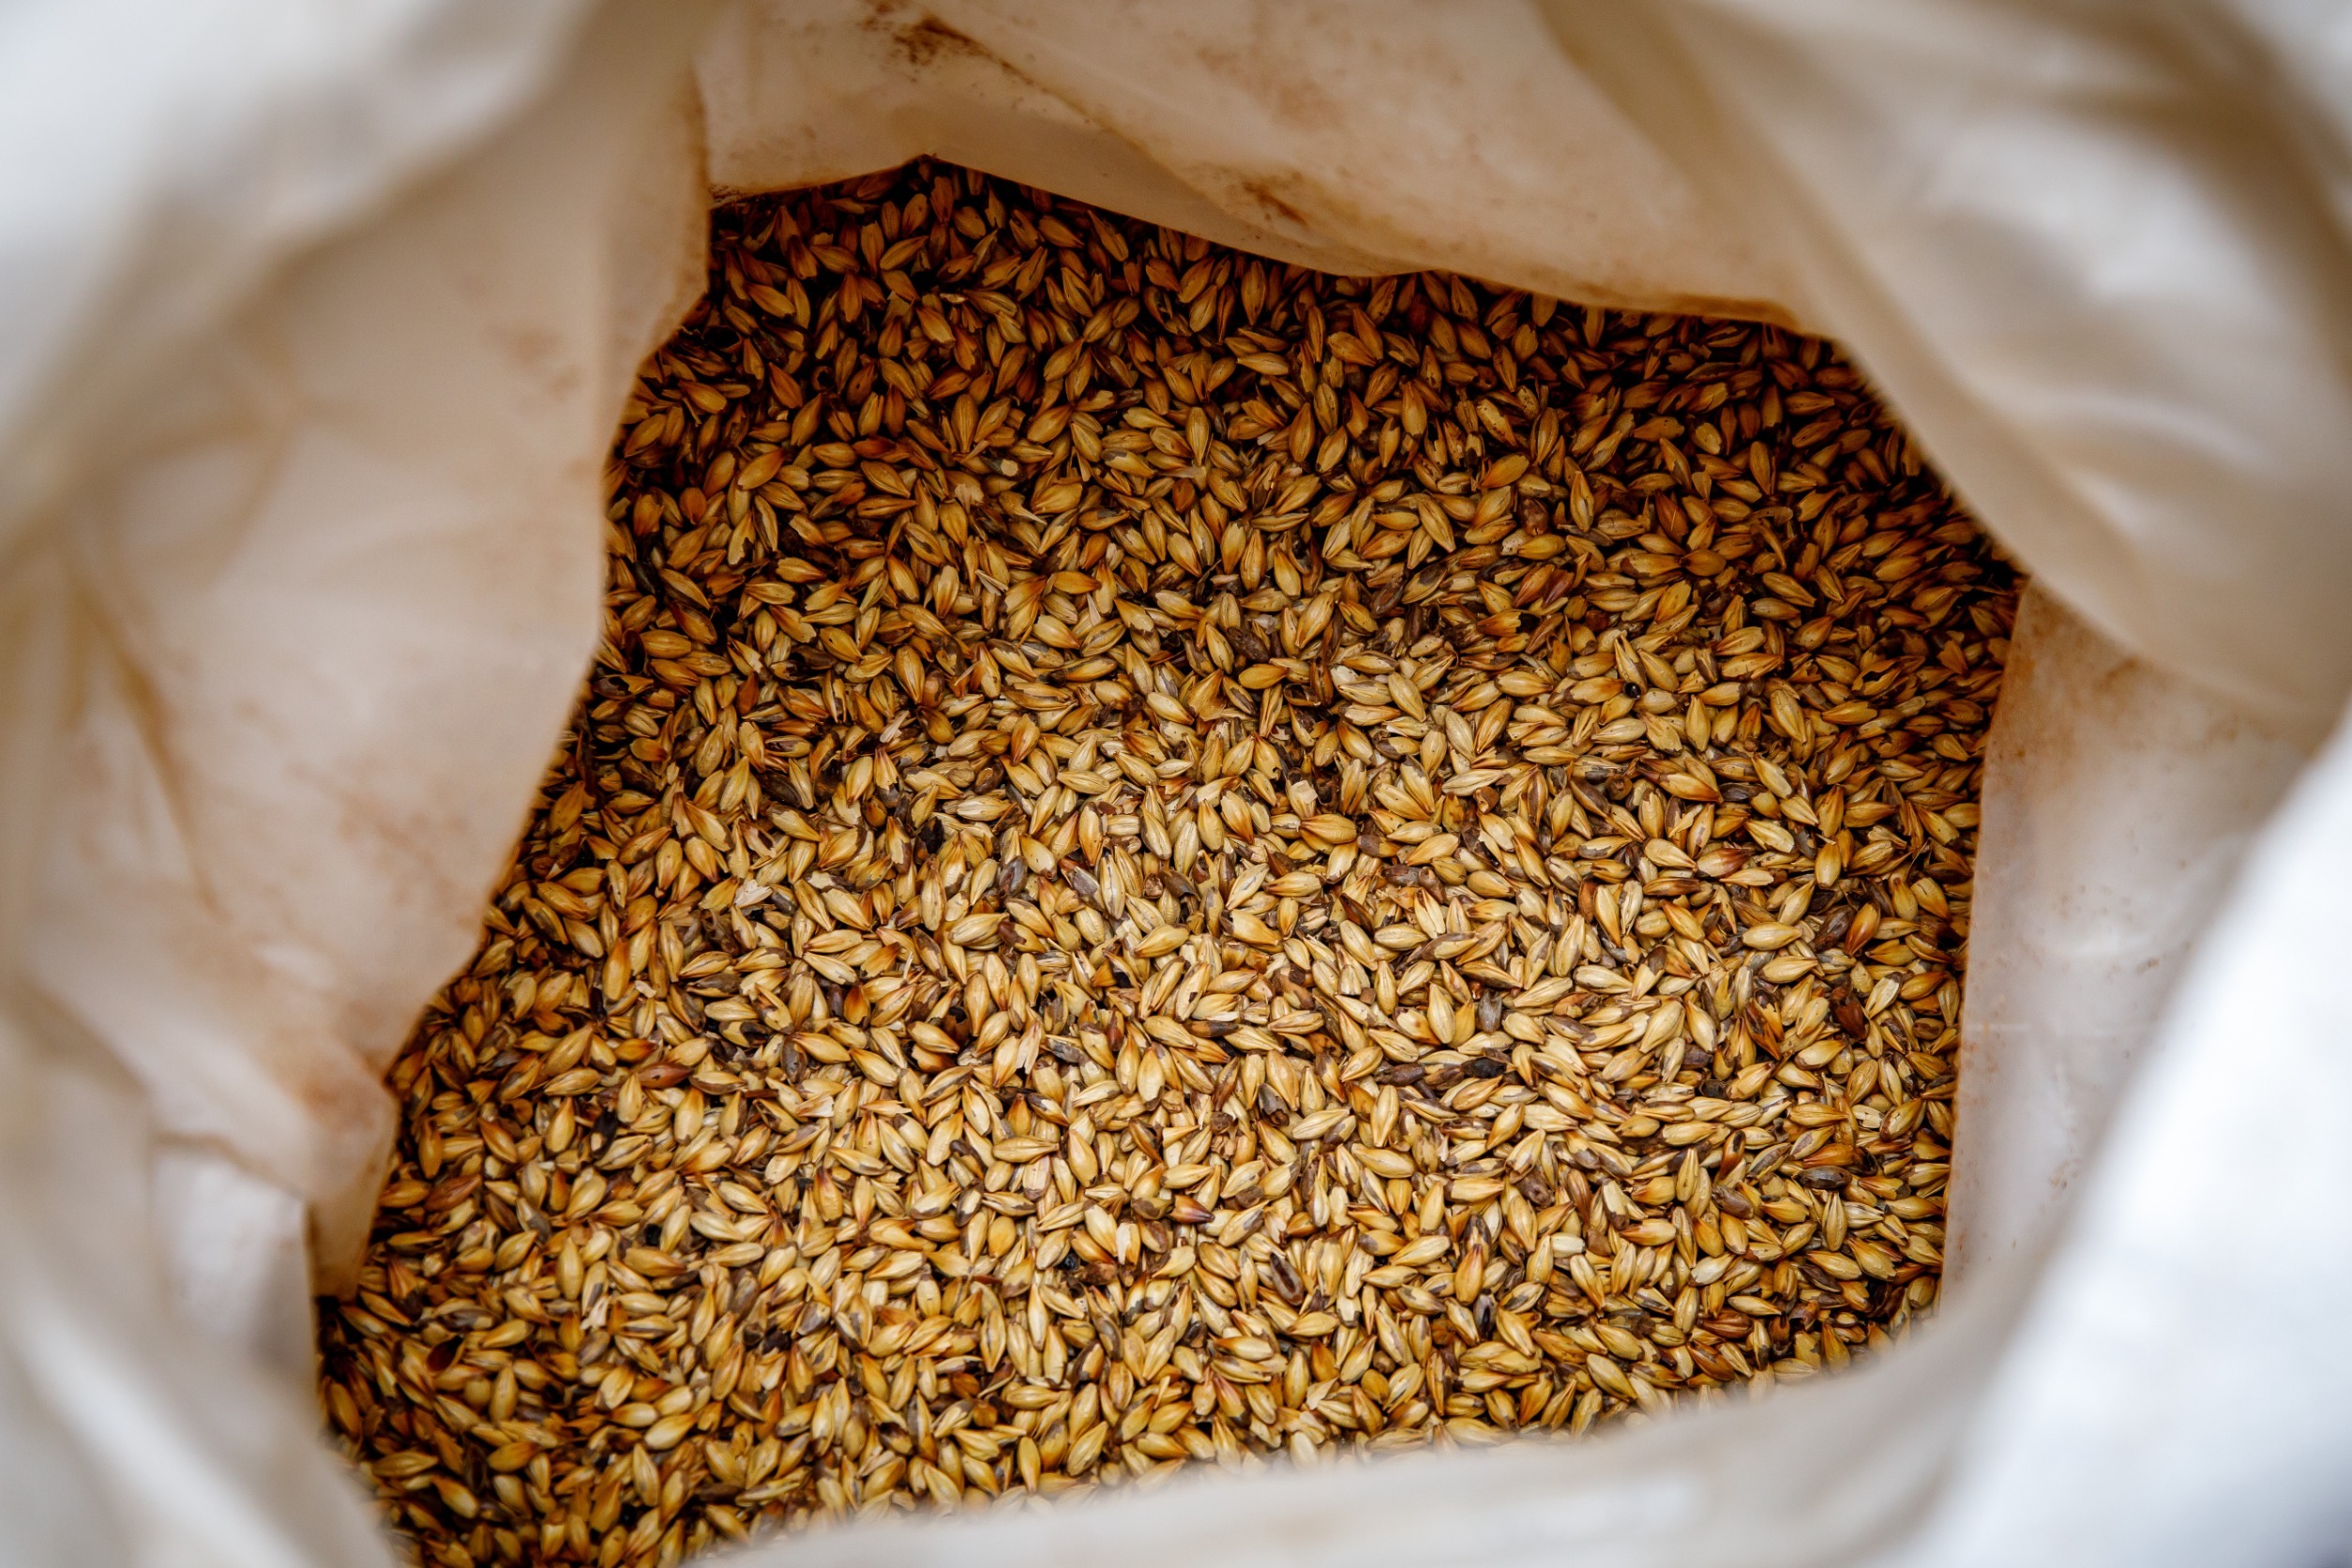 kilned barley malt in a bag: base malts